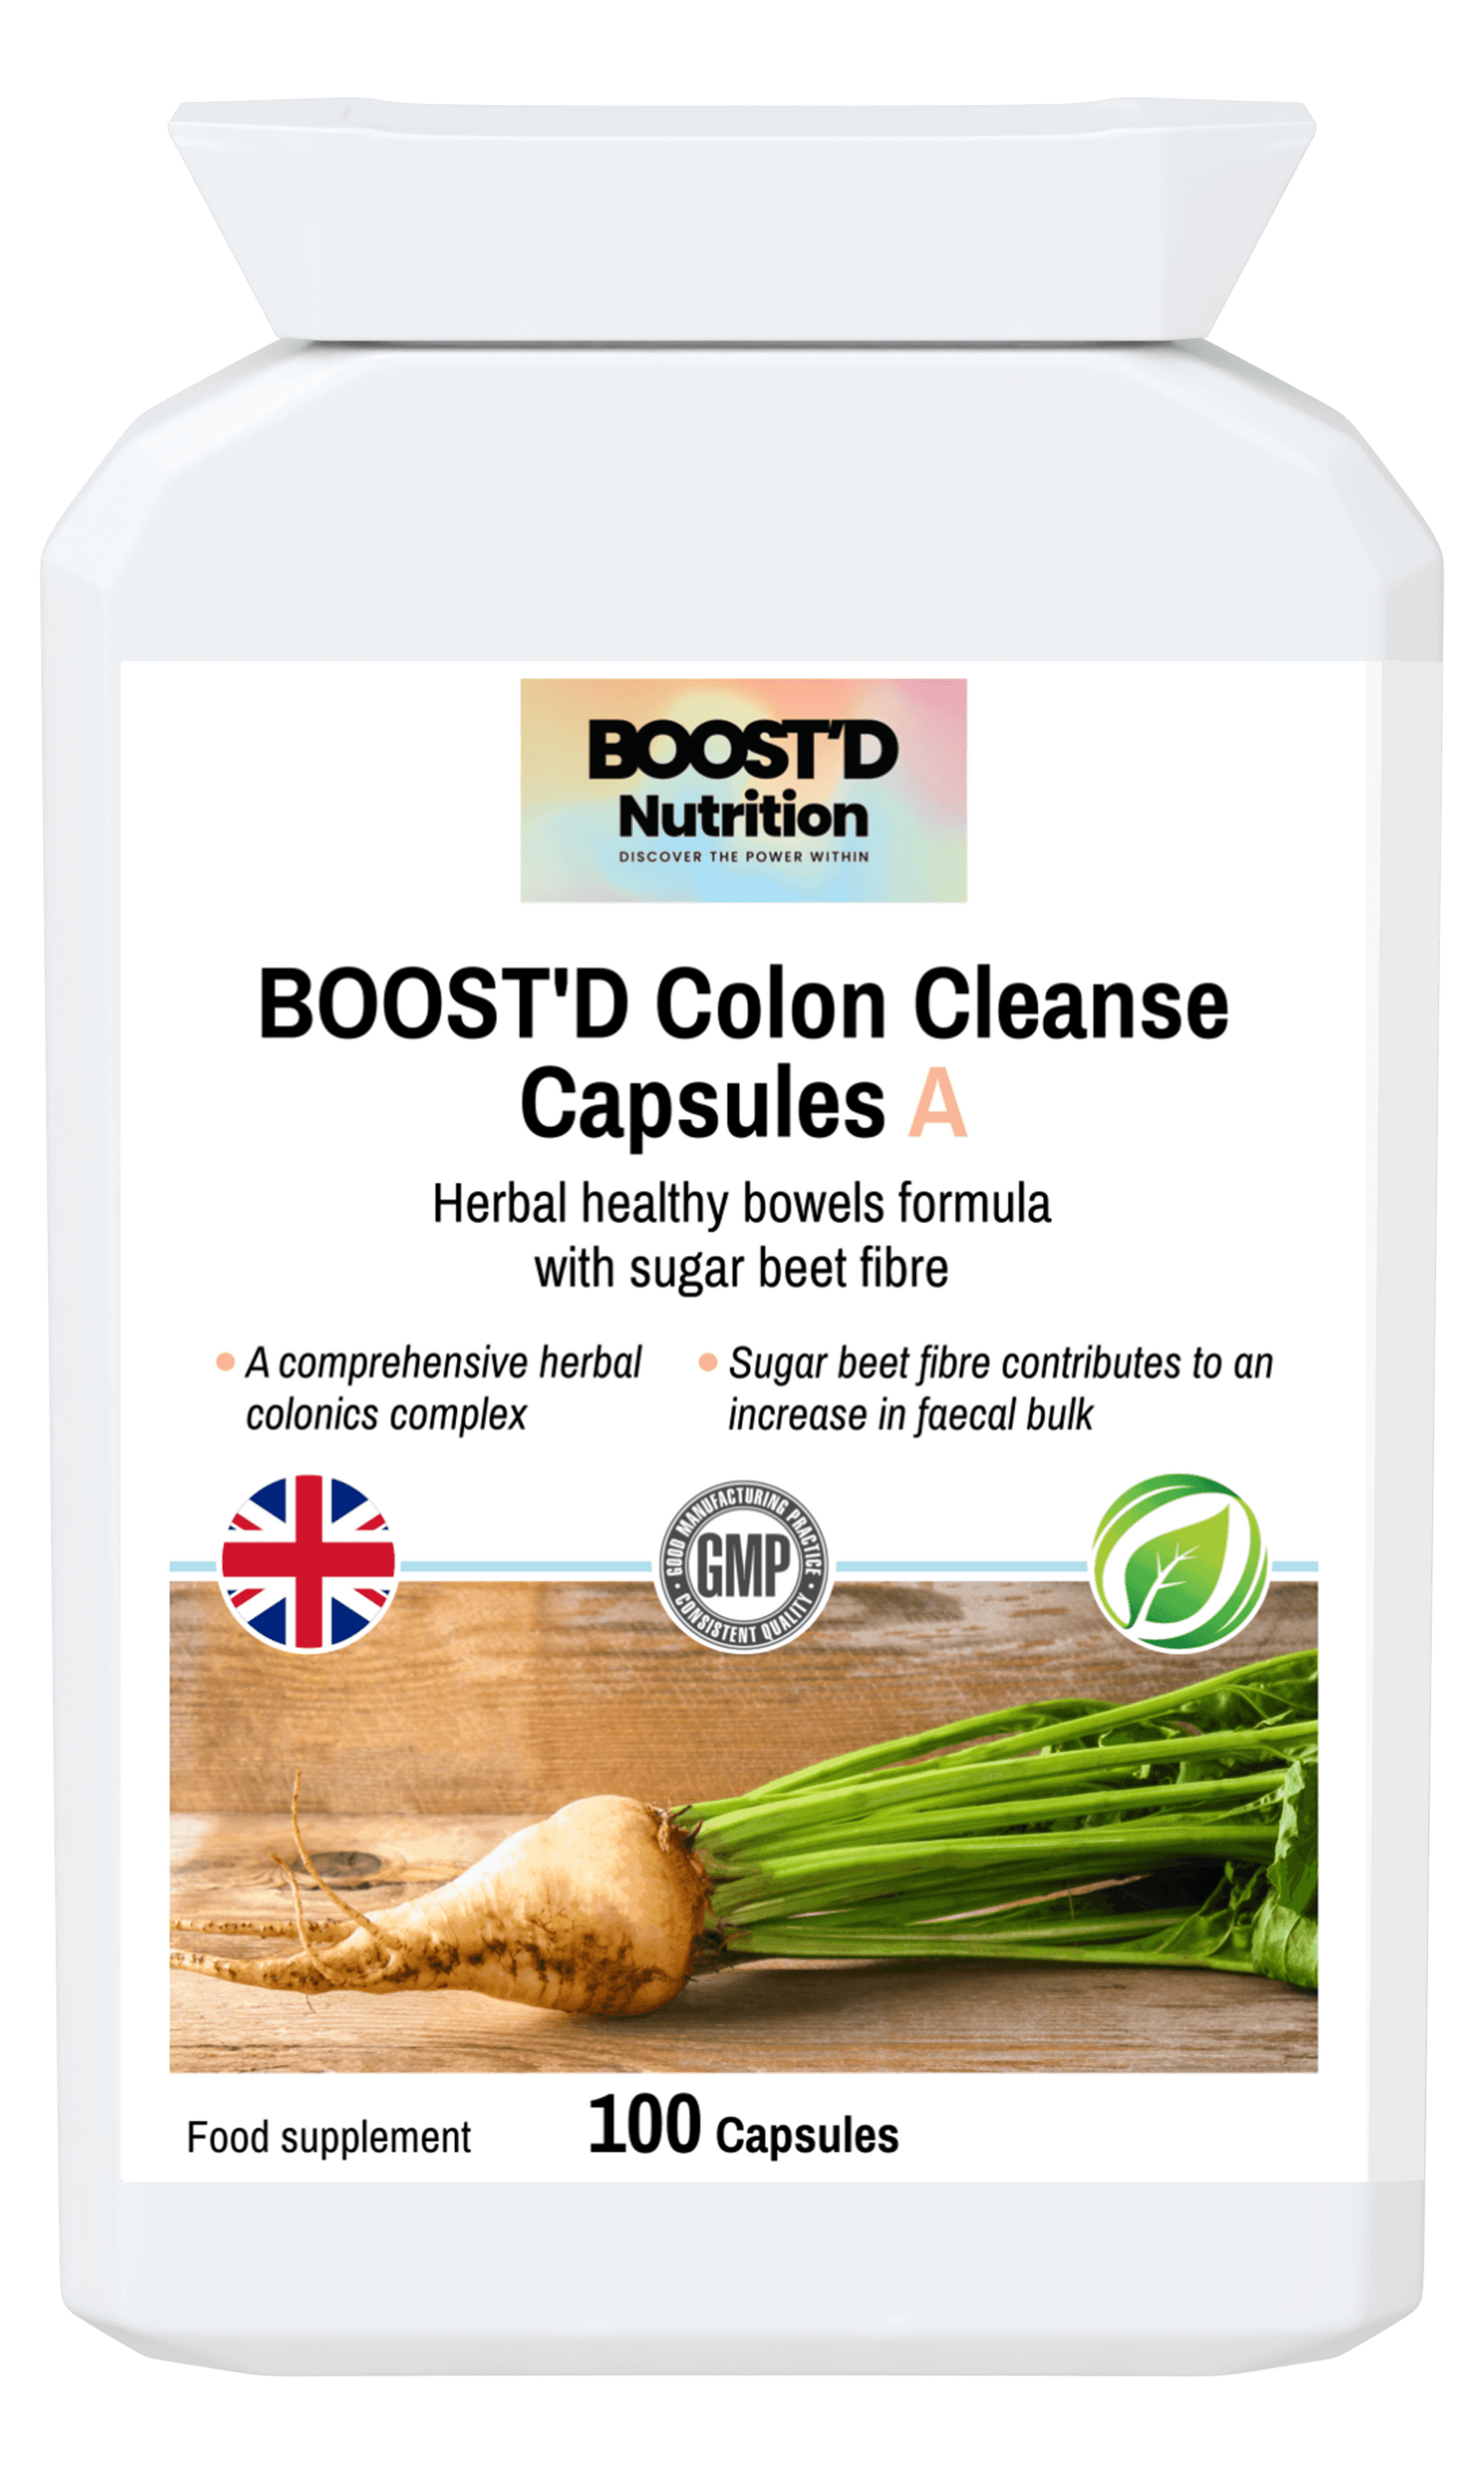 BOOST'D Colon Cleanse Capsules A (100) - BOOSTD Nutrition -